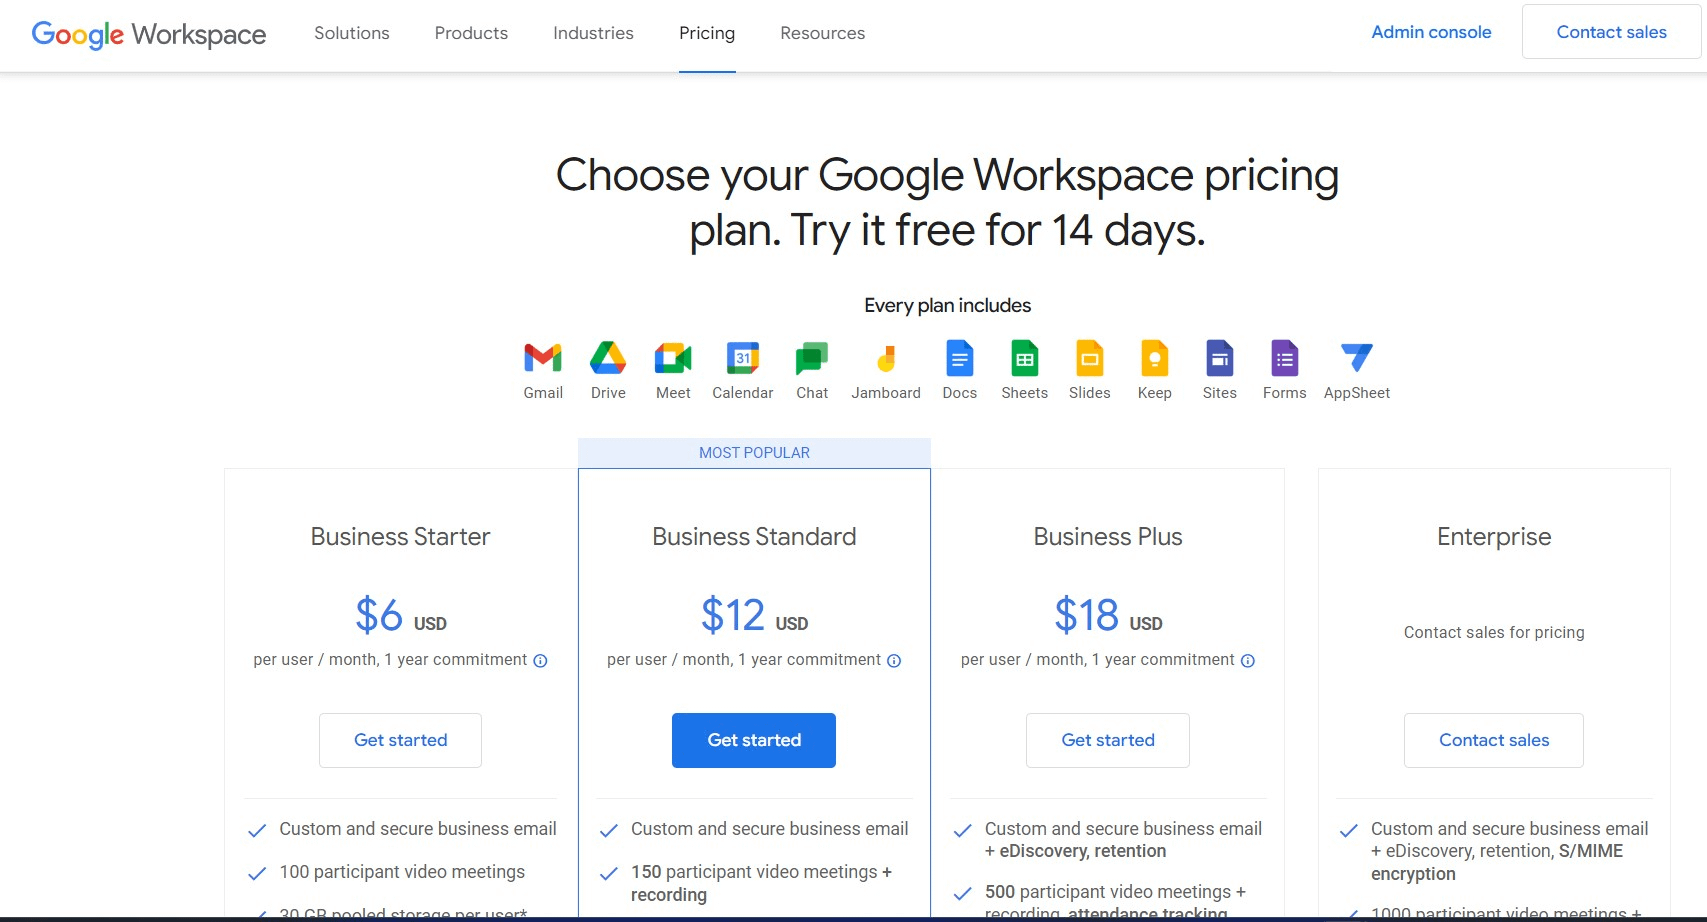 Google Workspace pricing